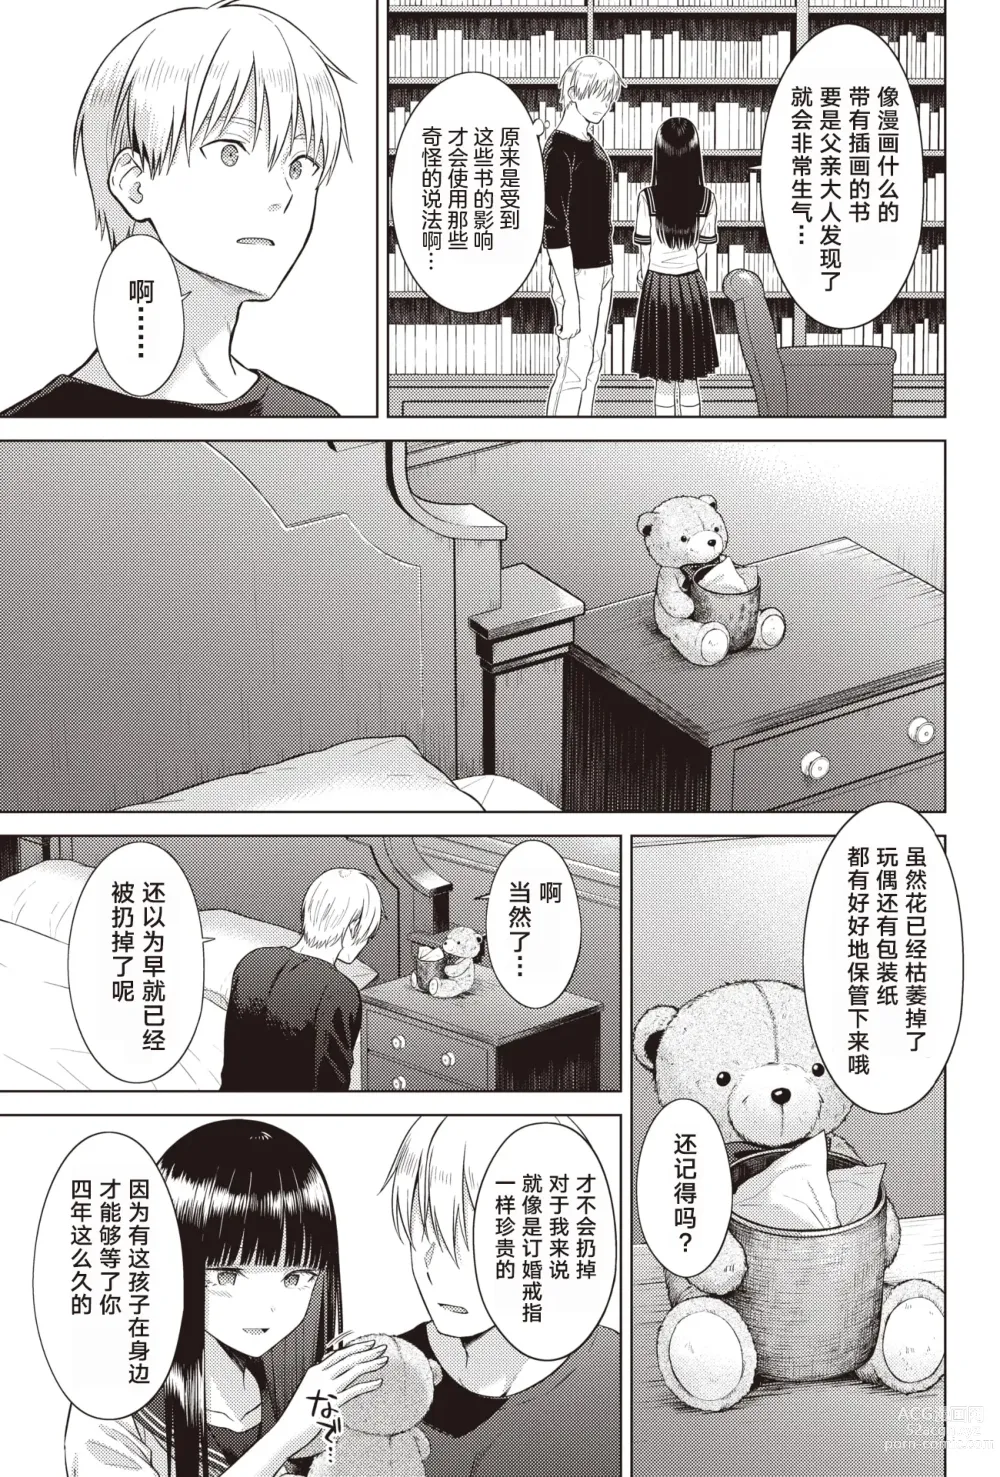 Page 27 of manga Garden of EDEN